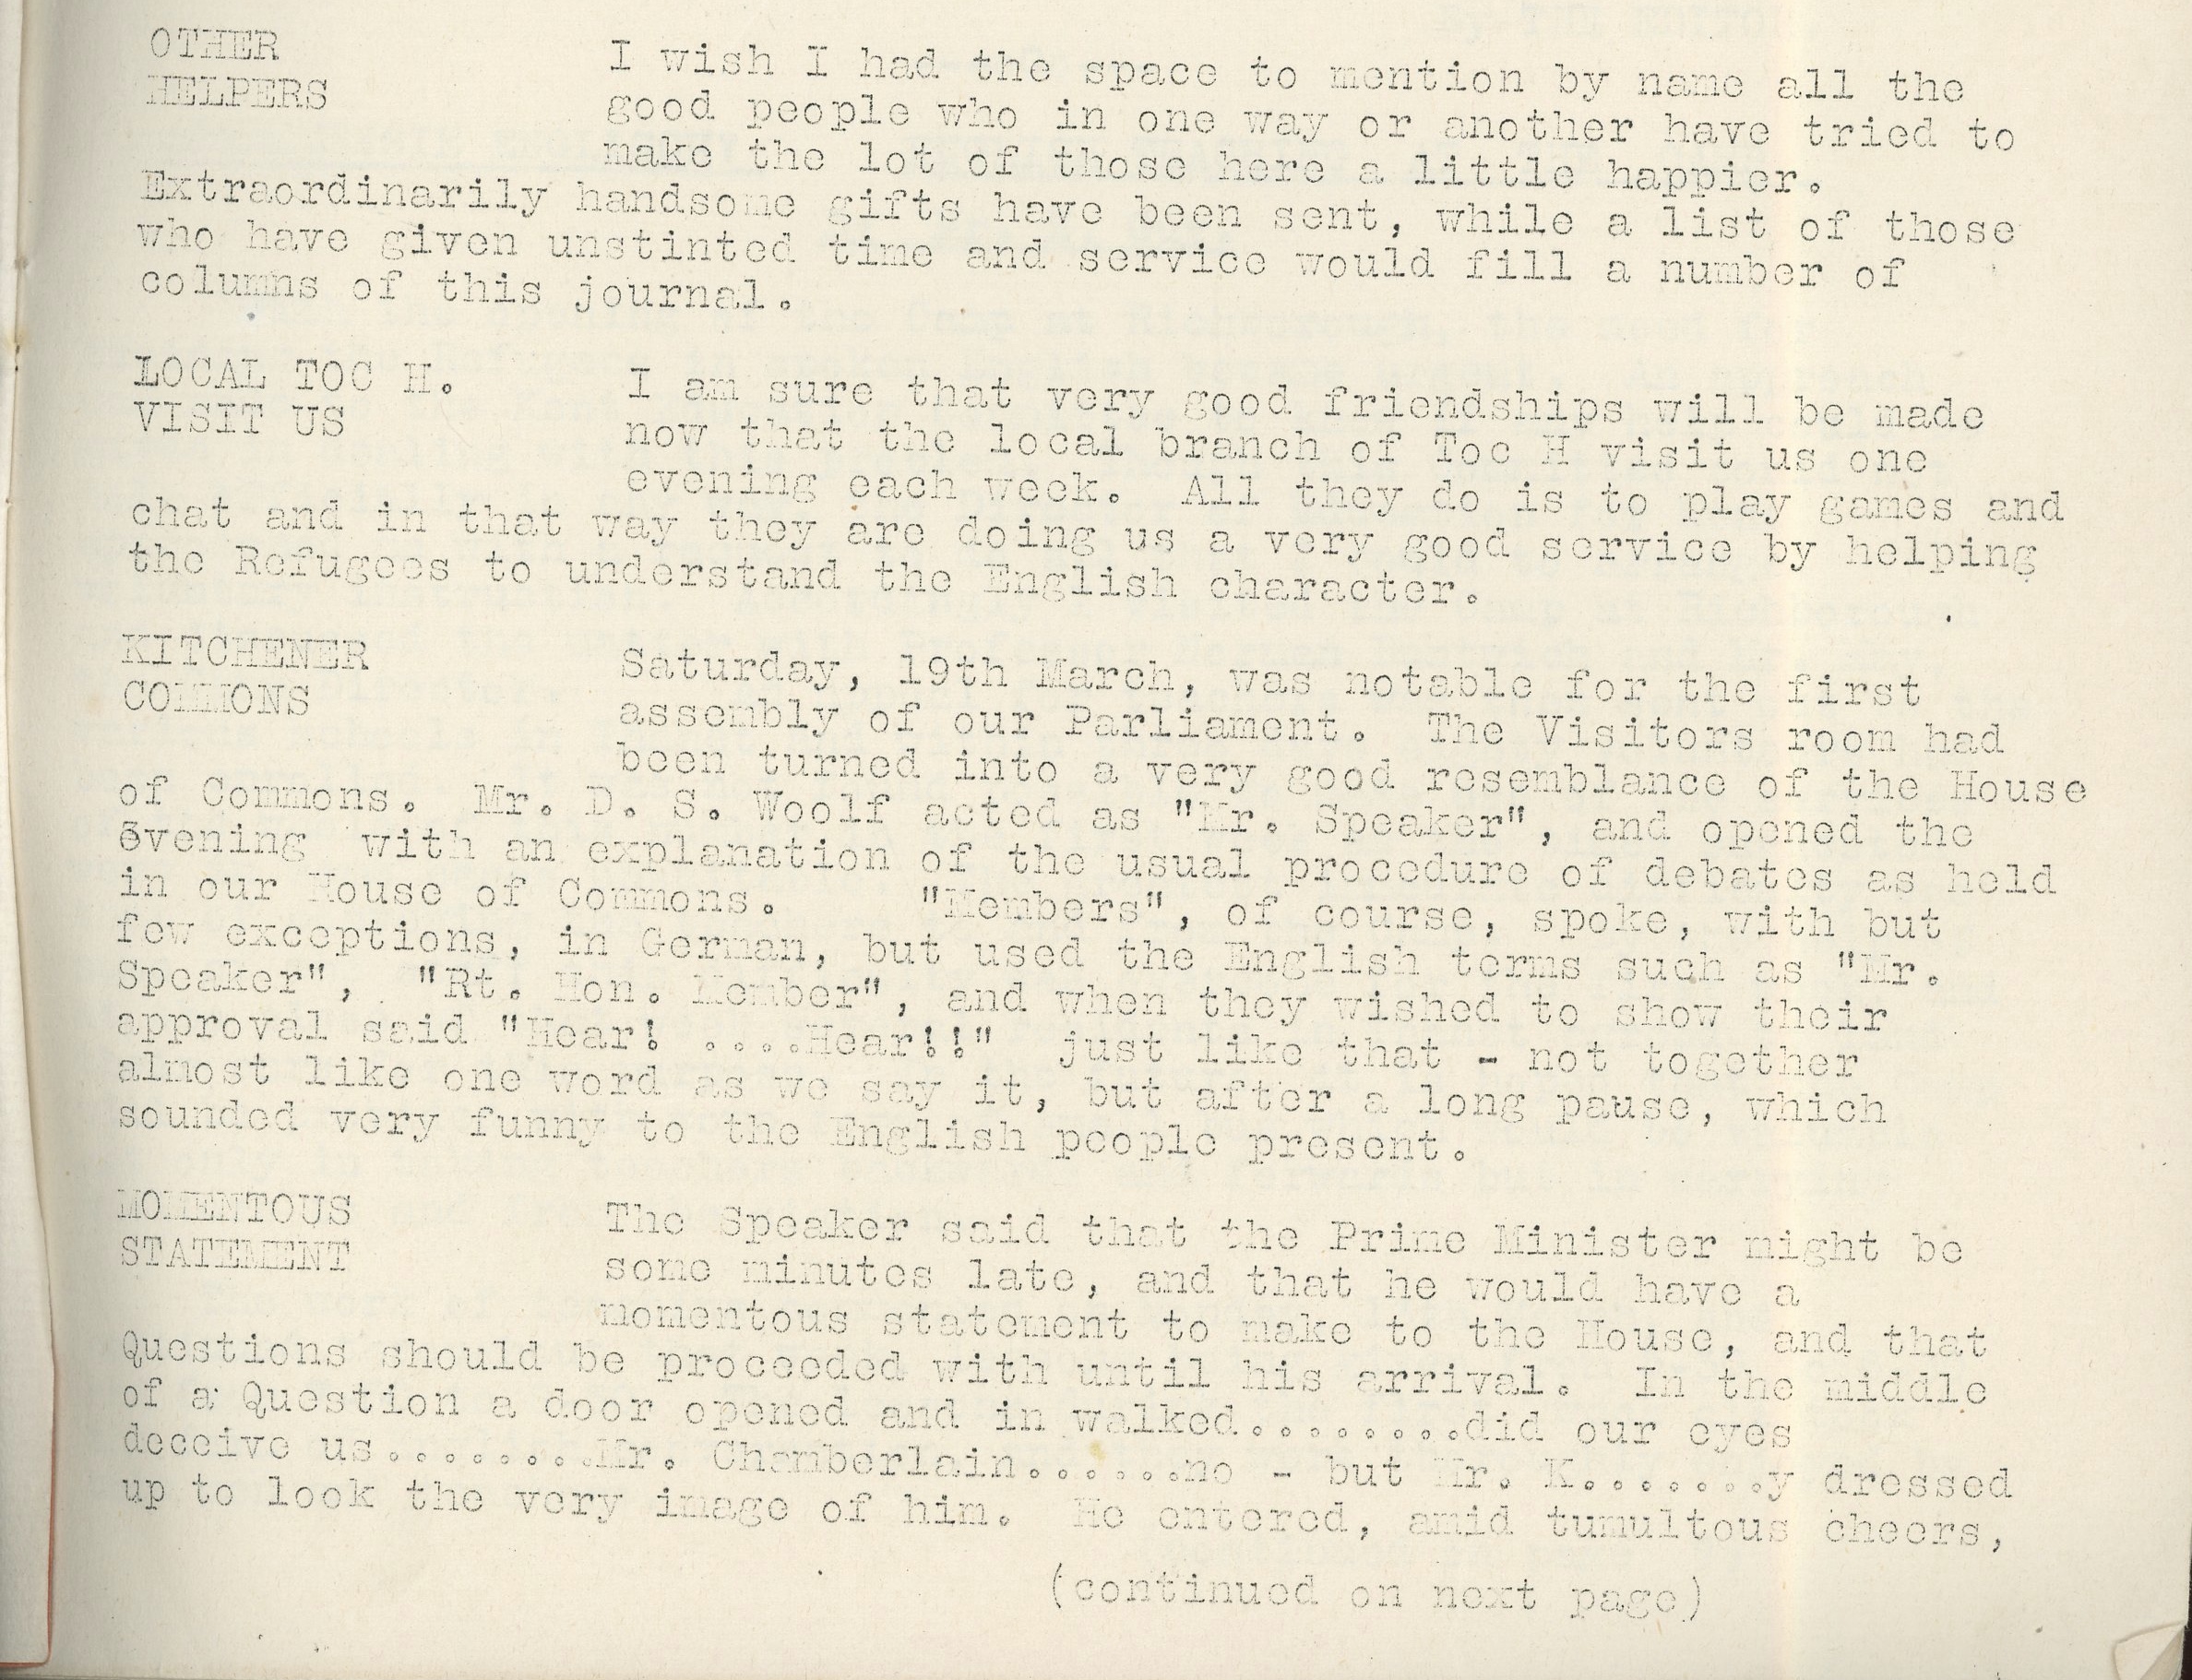 Kitchener Camp Review, April 1939, page 2, base